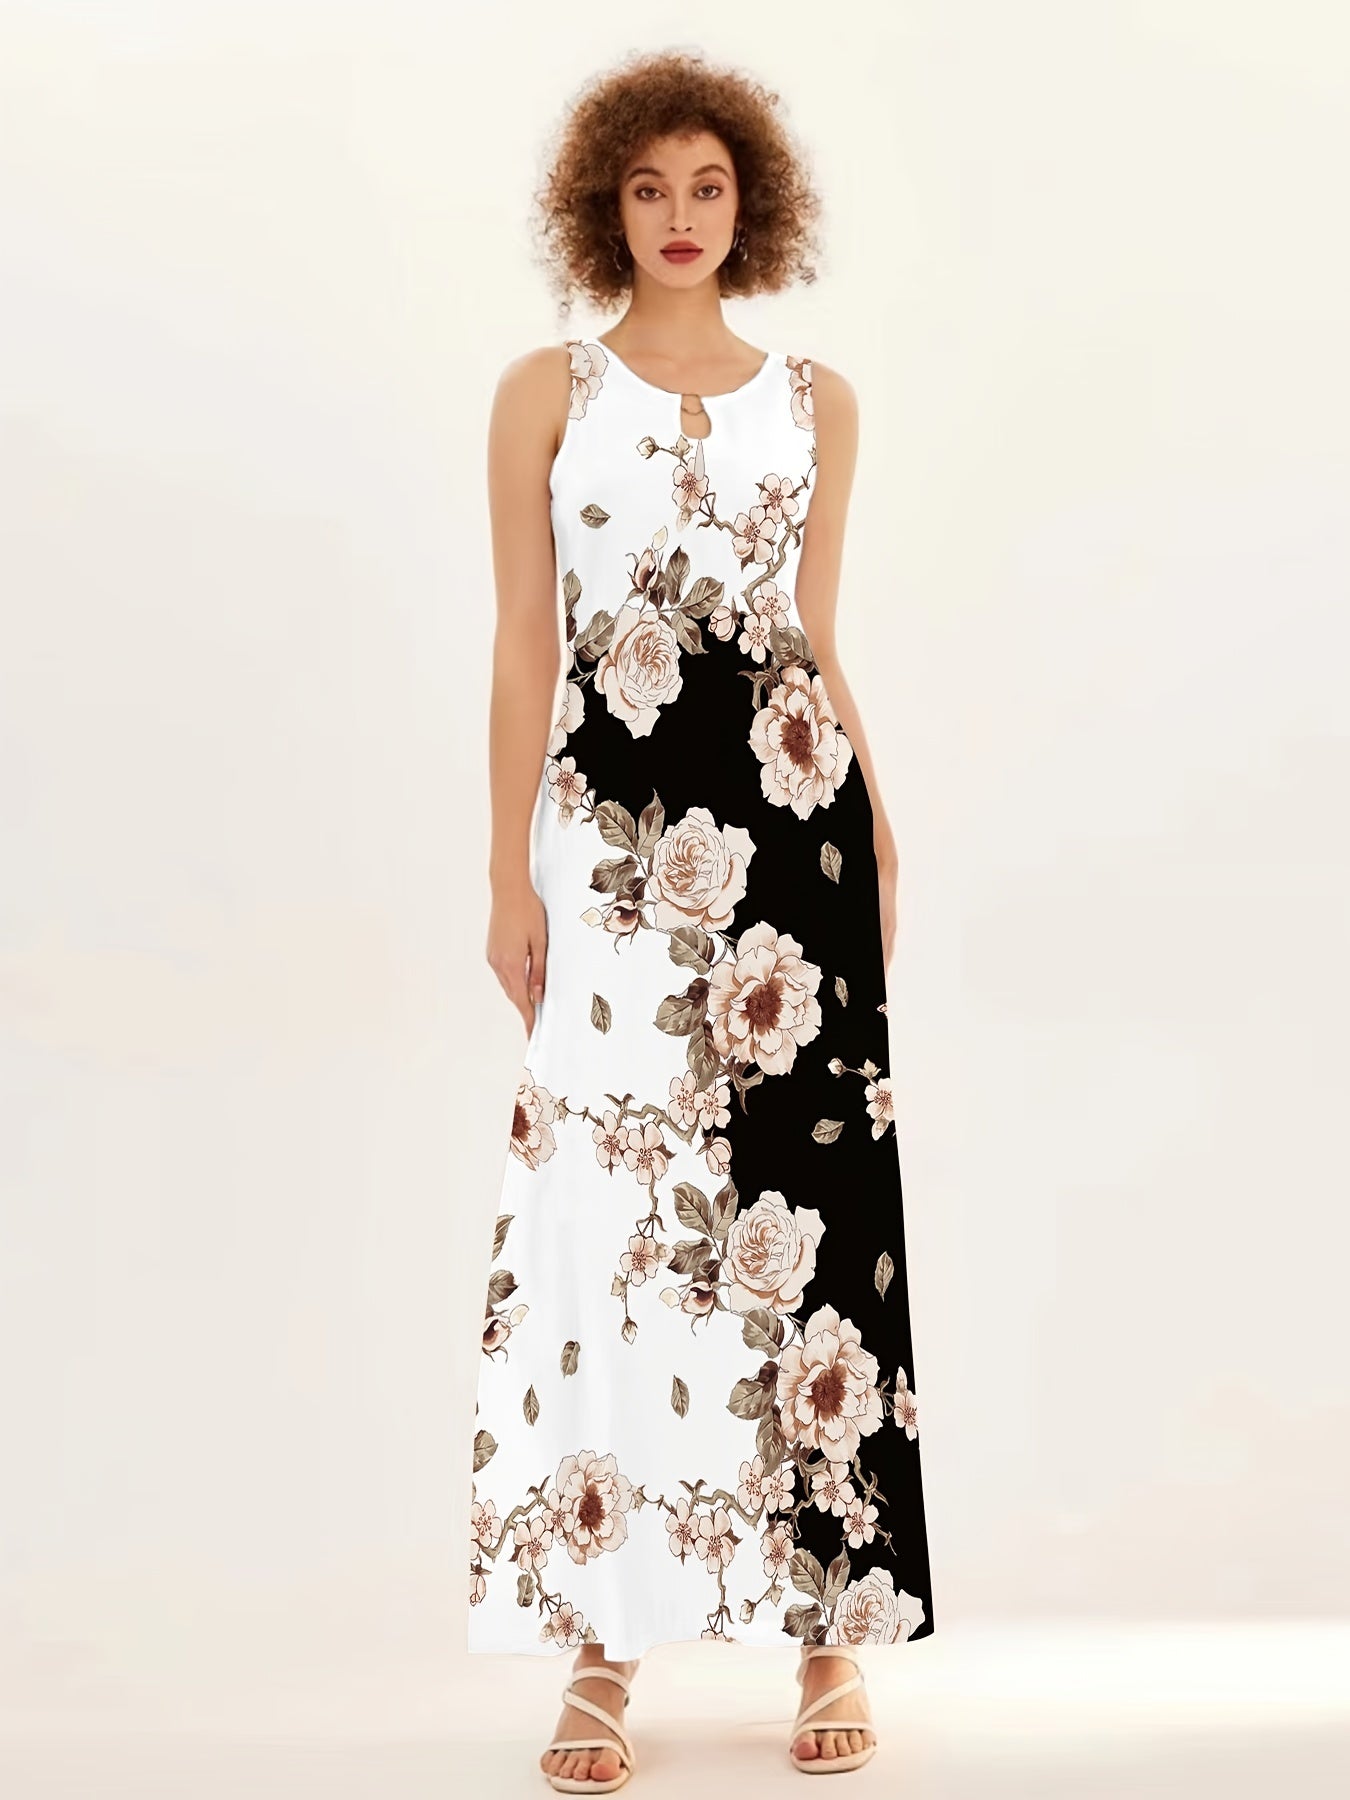 「lovevop」Floral Print Pocket Dress, Casual Pocket Waist Summer Swing Long Dresses, Women's Clothing